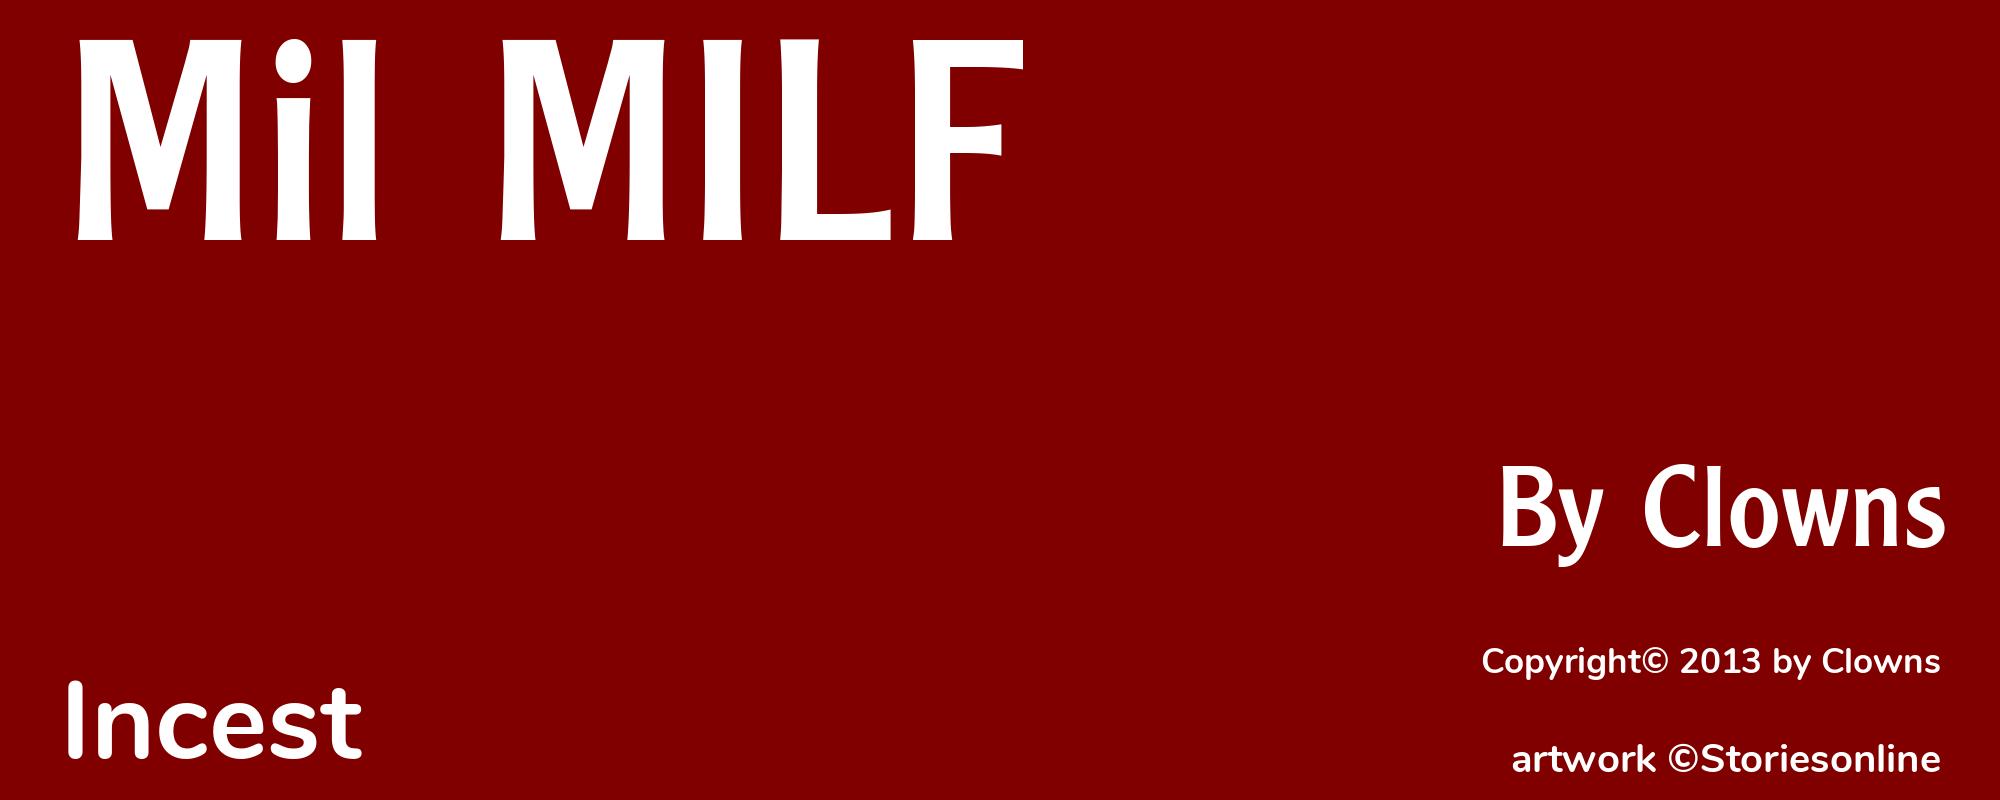 Mil MILF - Cover